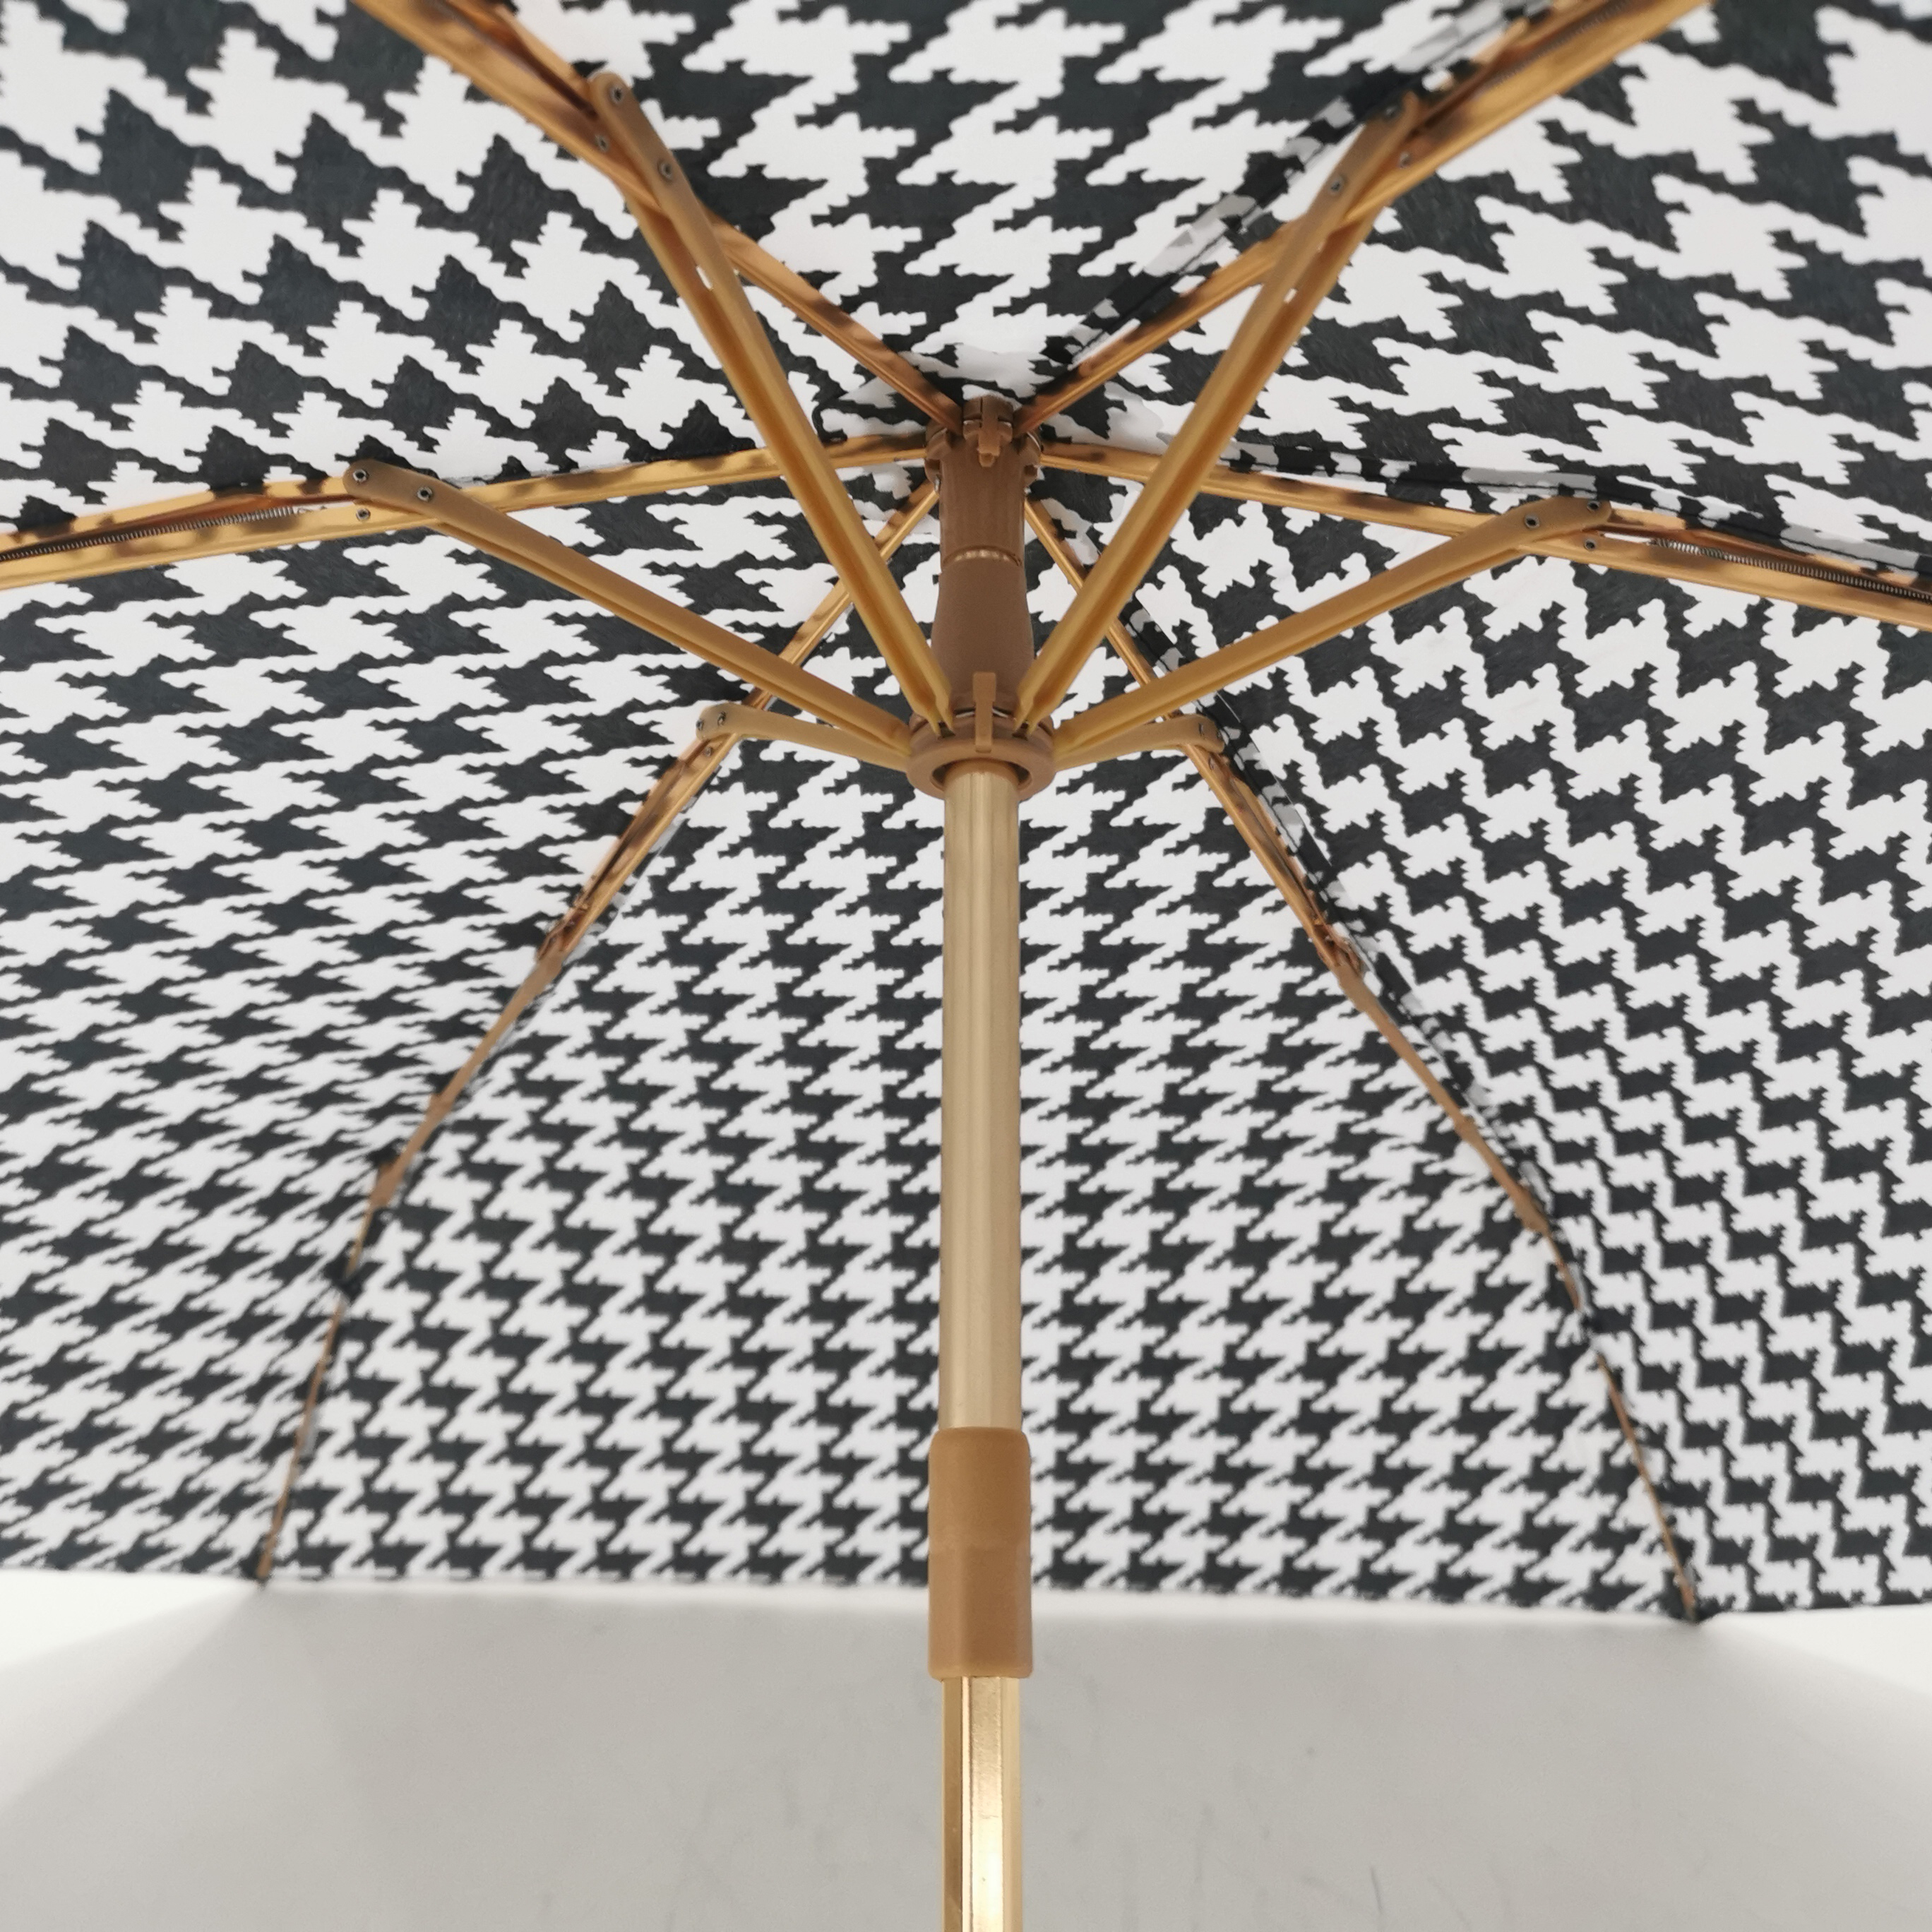 https://www.hodaumbrella.com/slim-and-light-stick-umbrella-product/